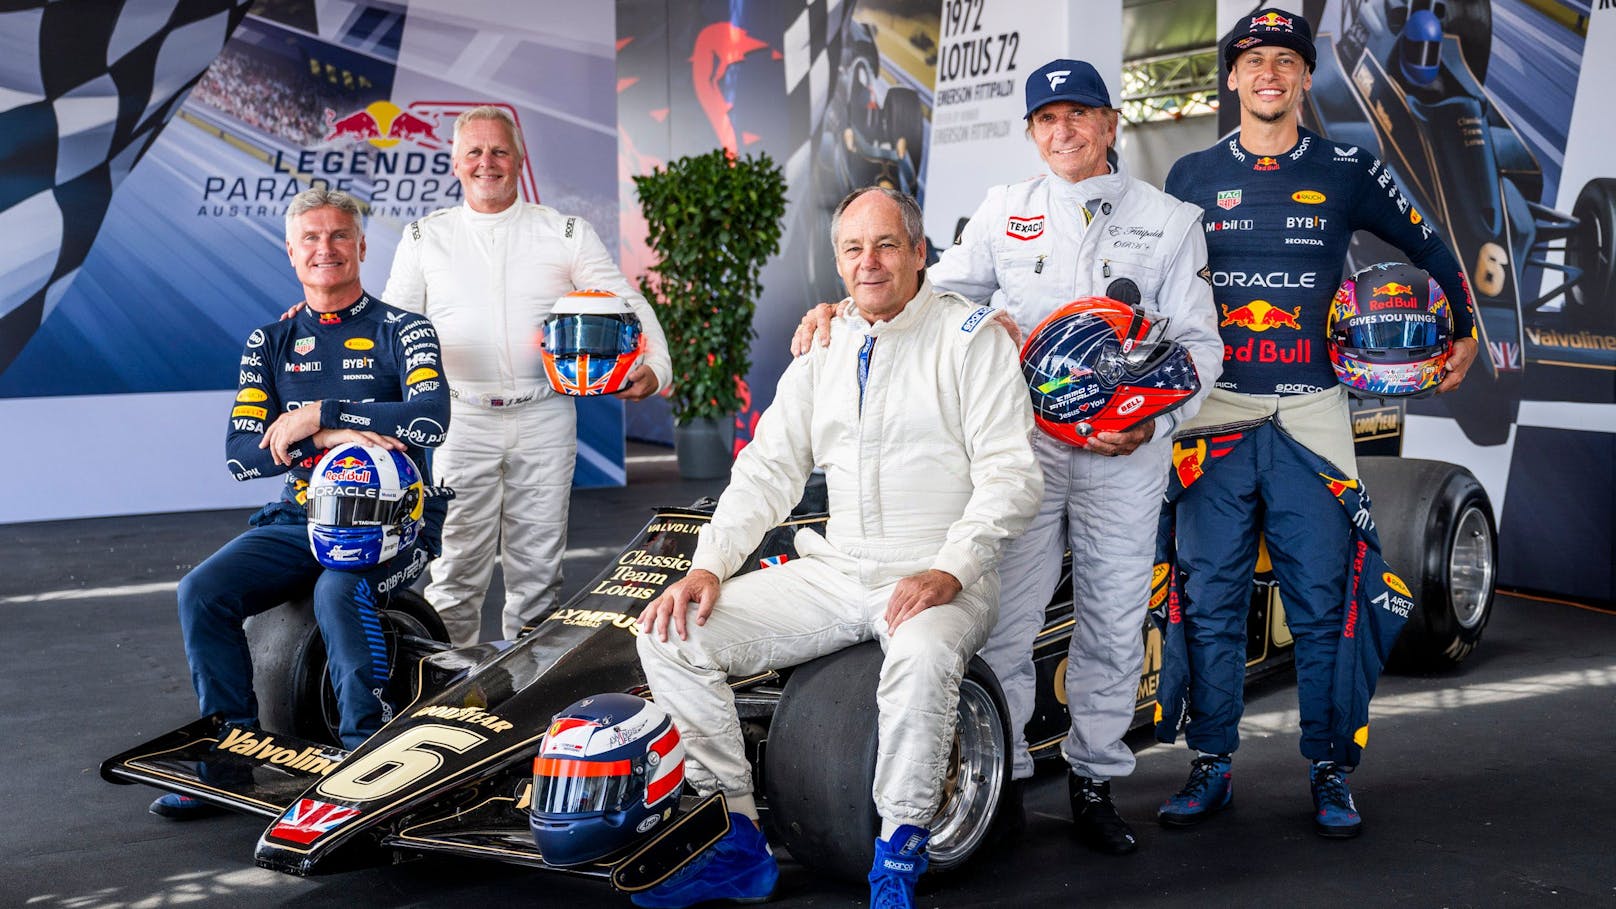 Legends Parade mit David Coulthard, Gerhard Berger, Patrick Friesacher